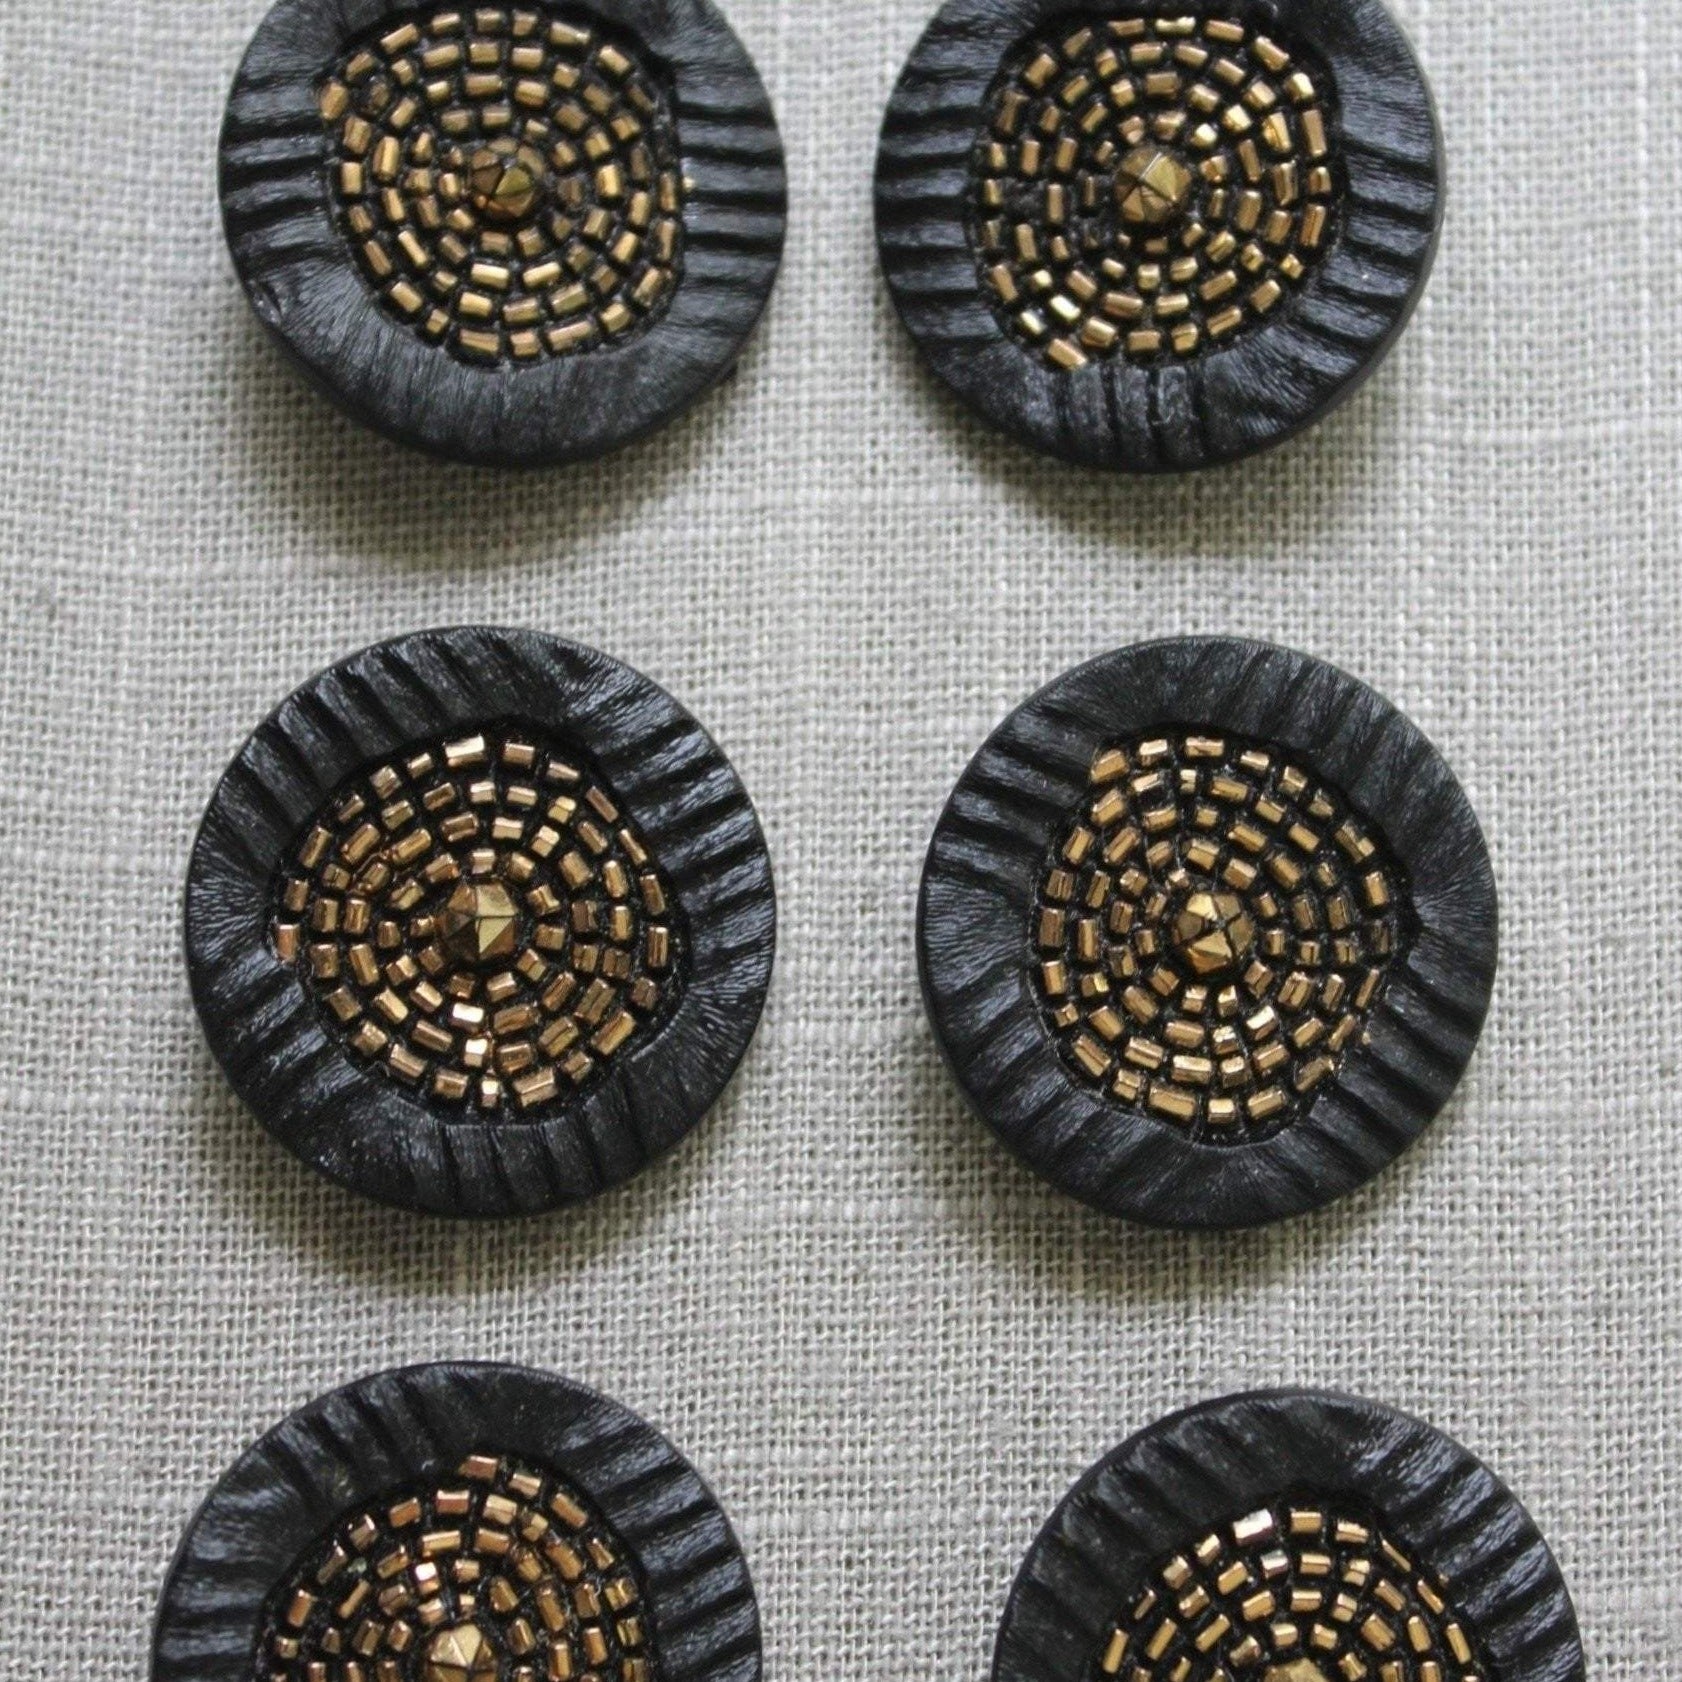 LA MODE Black Glass Buttons 1 3/8" Vintage Collection 6 Gold Sequin Center designer